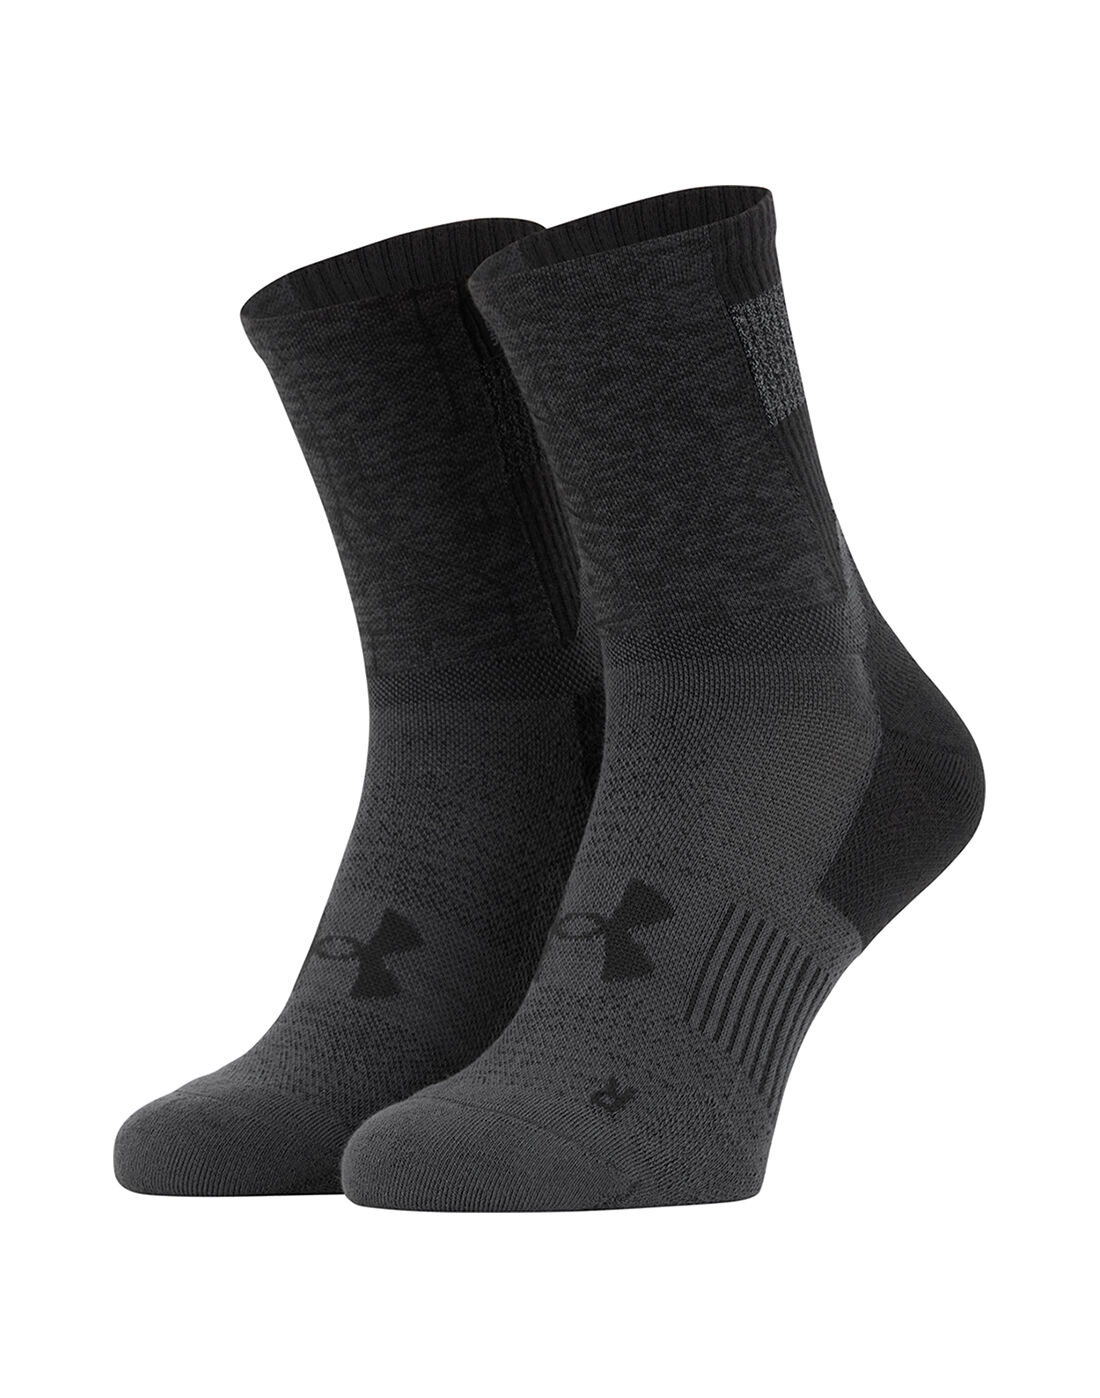 nike socks black friday sale